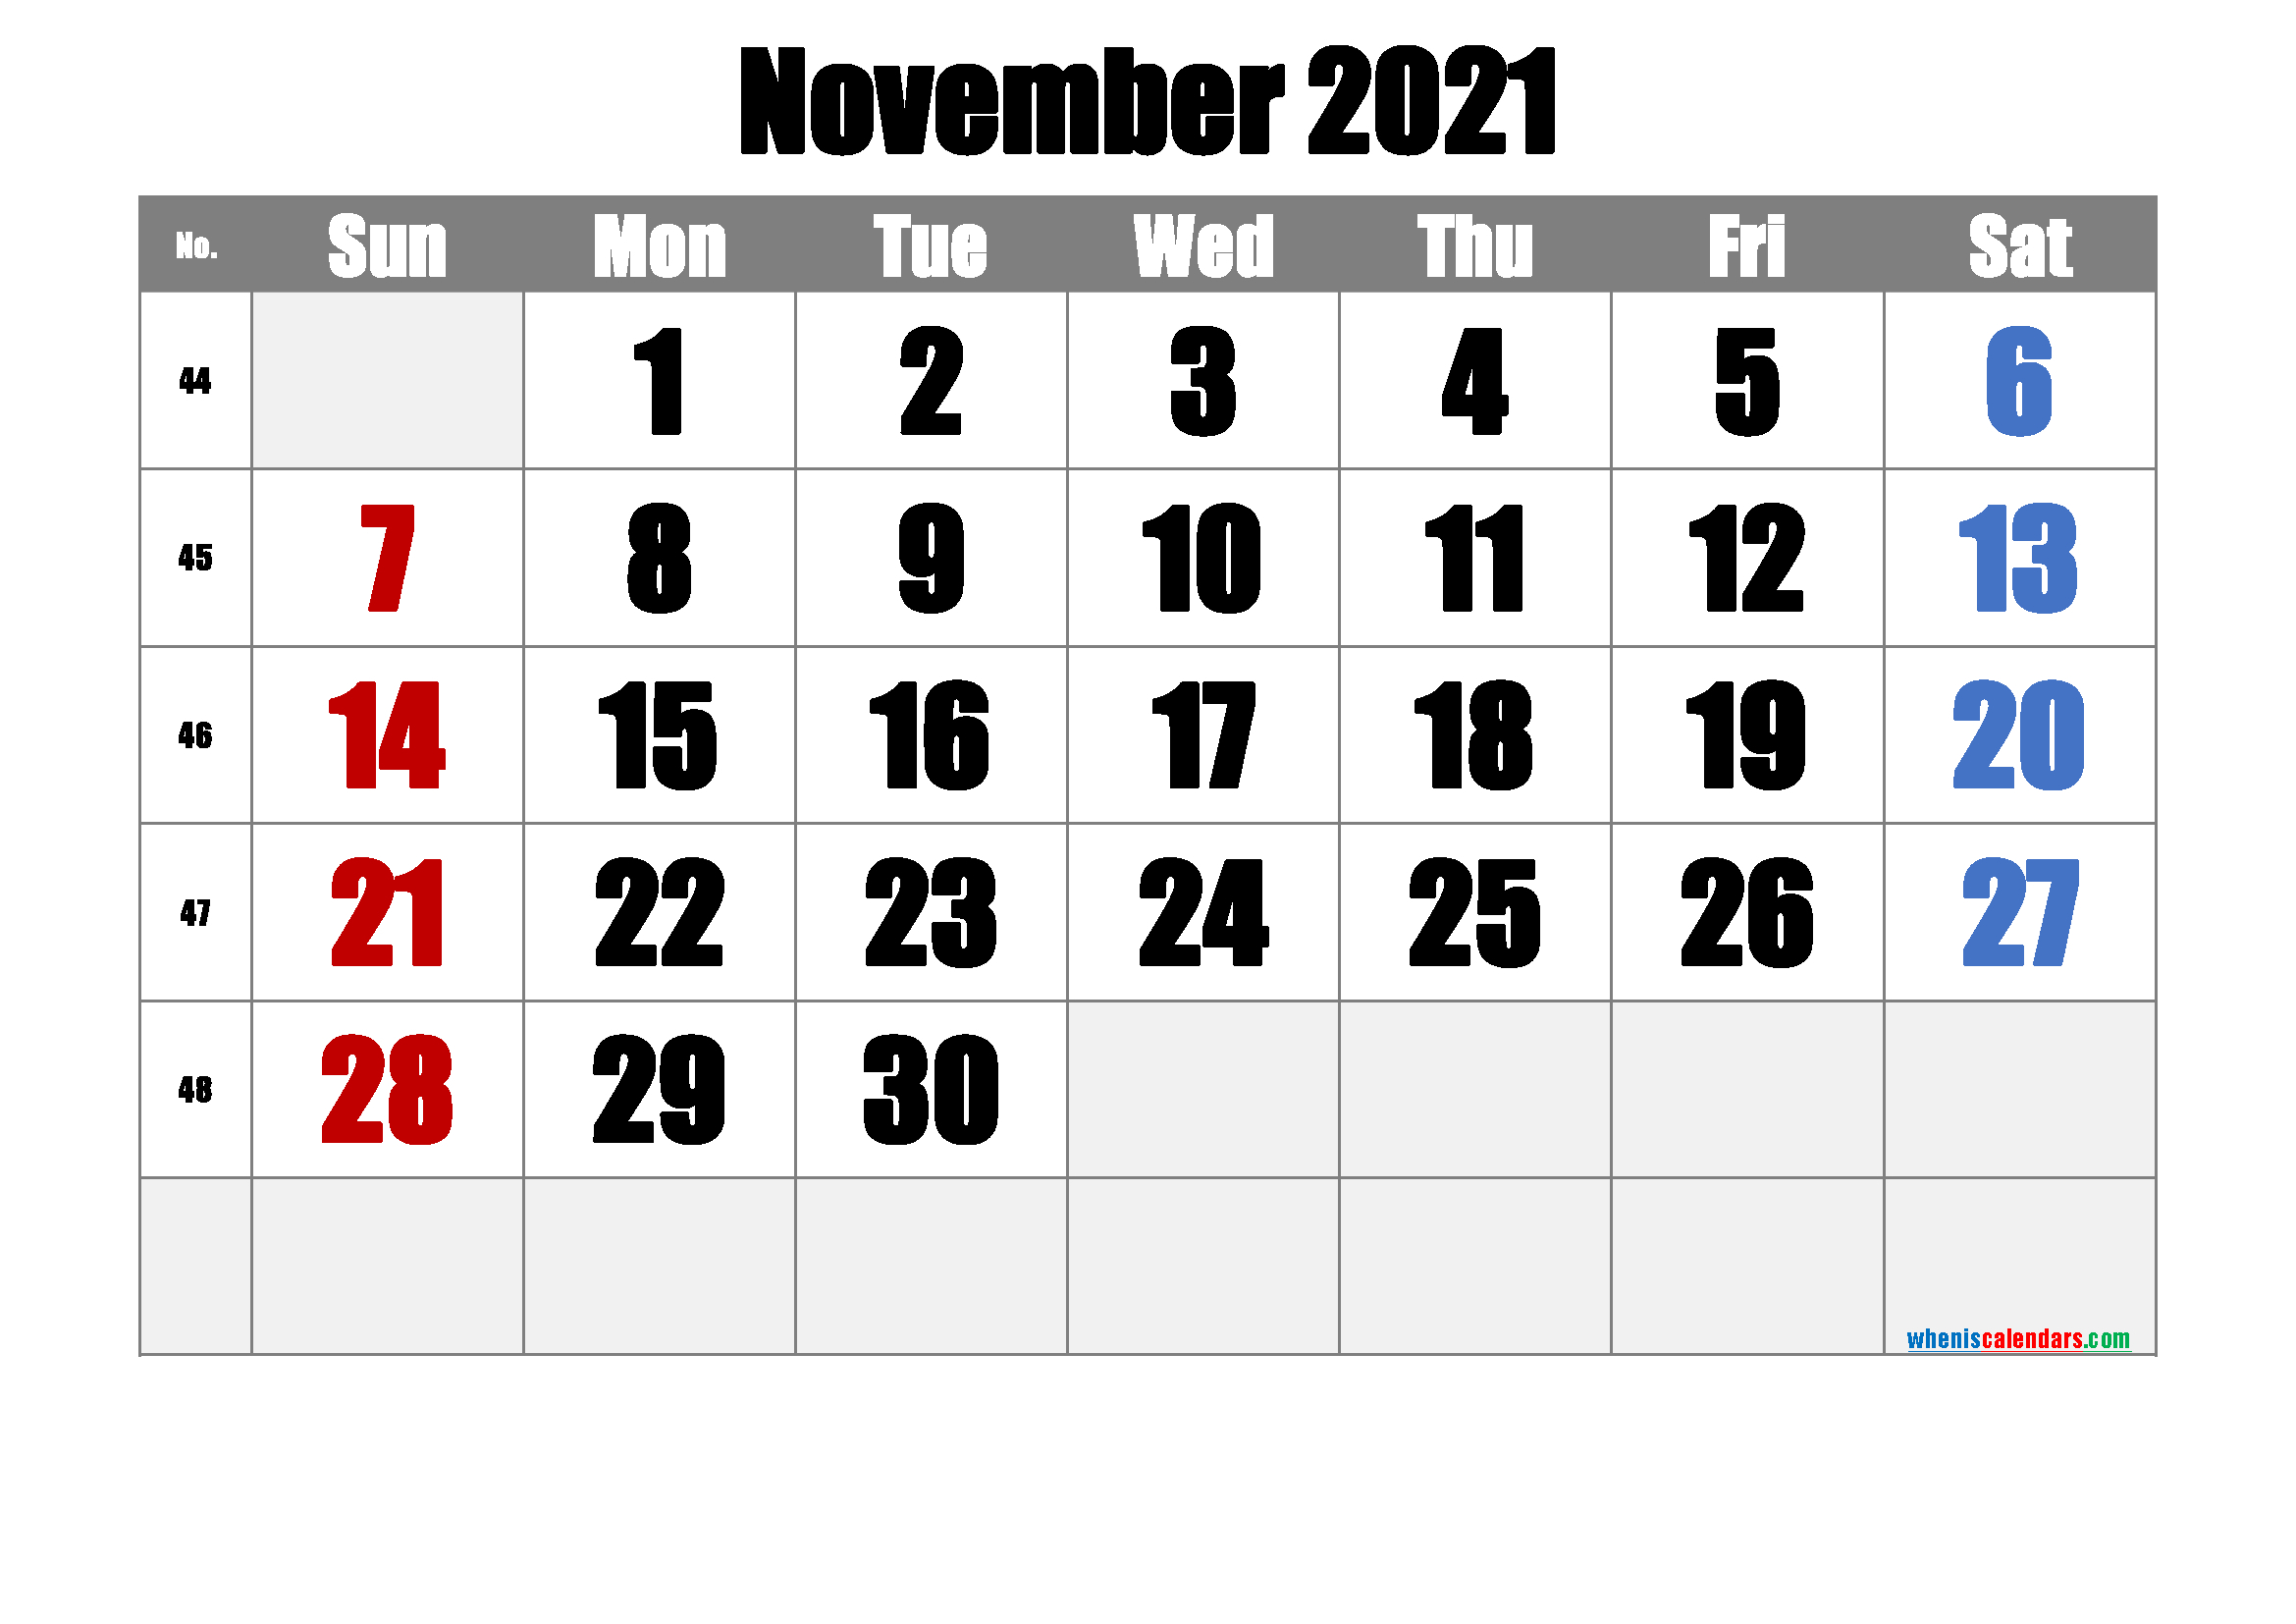 2021 November Calendar Free Printable | Example Calendar Printable November 2021 Calendar